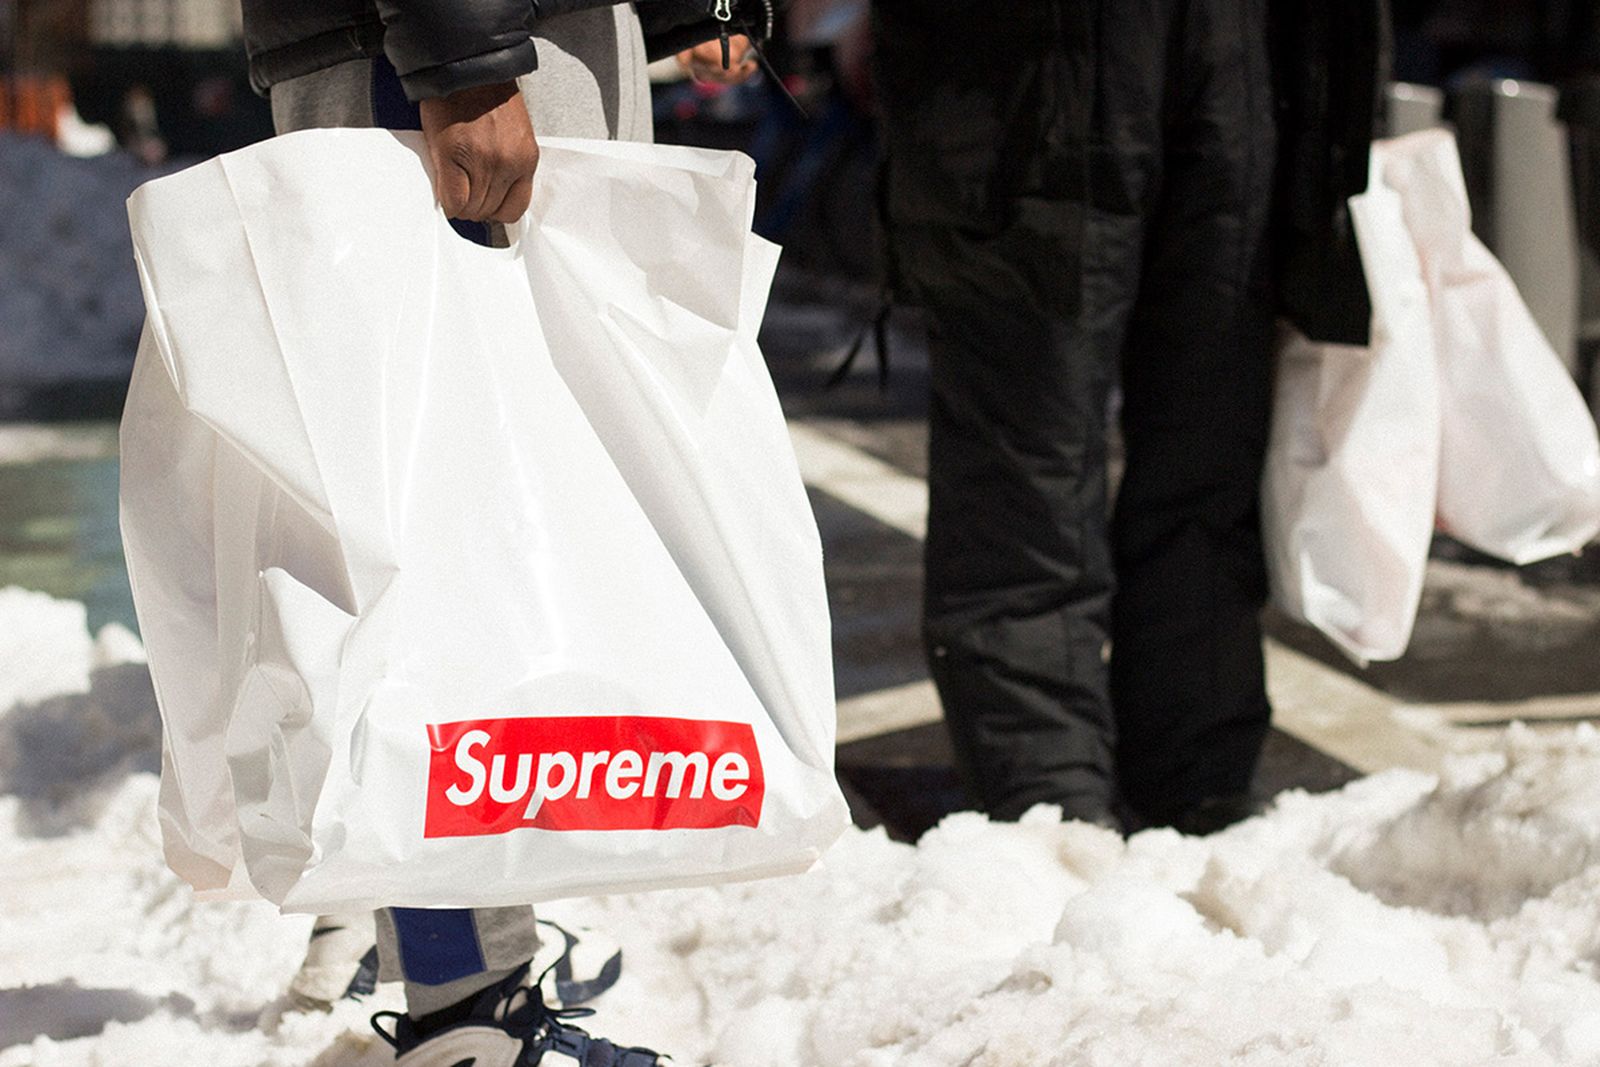 Afhankelijk Kracht barrière How to Buy Supreme Clothing: The Ultimate Beginner's Guide